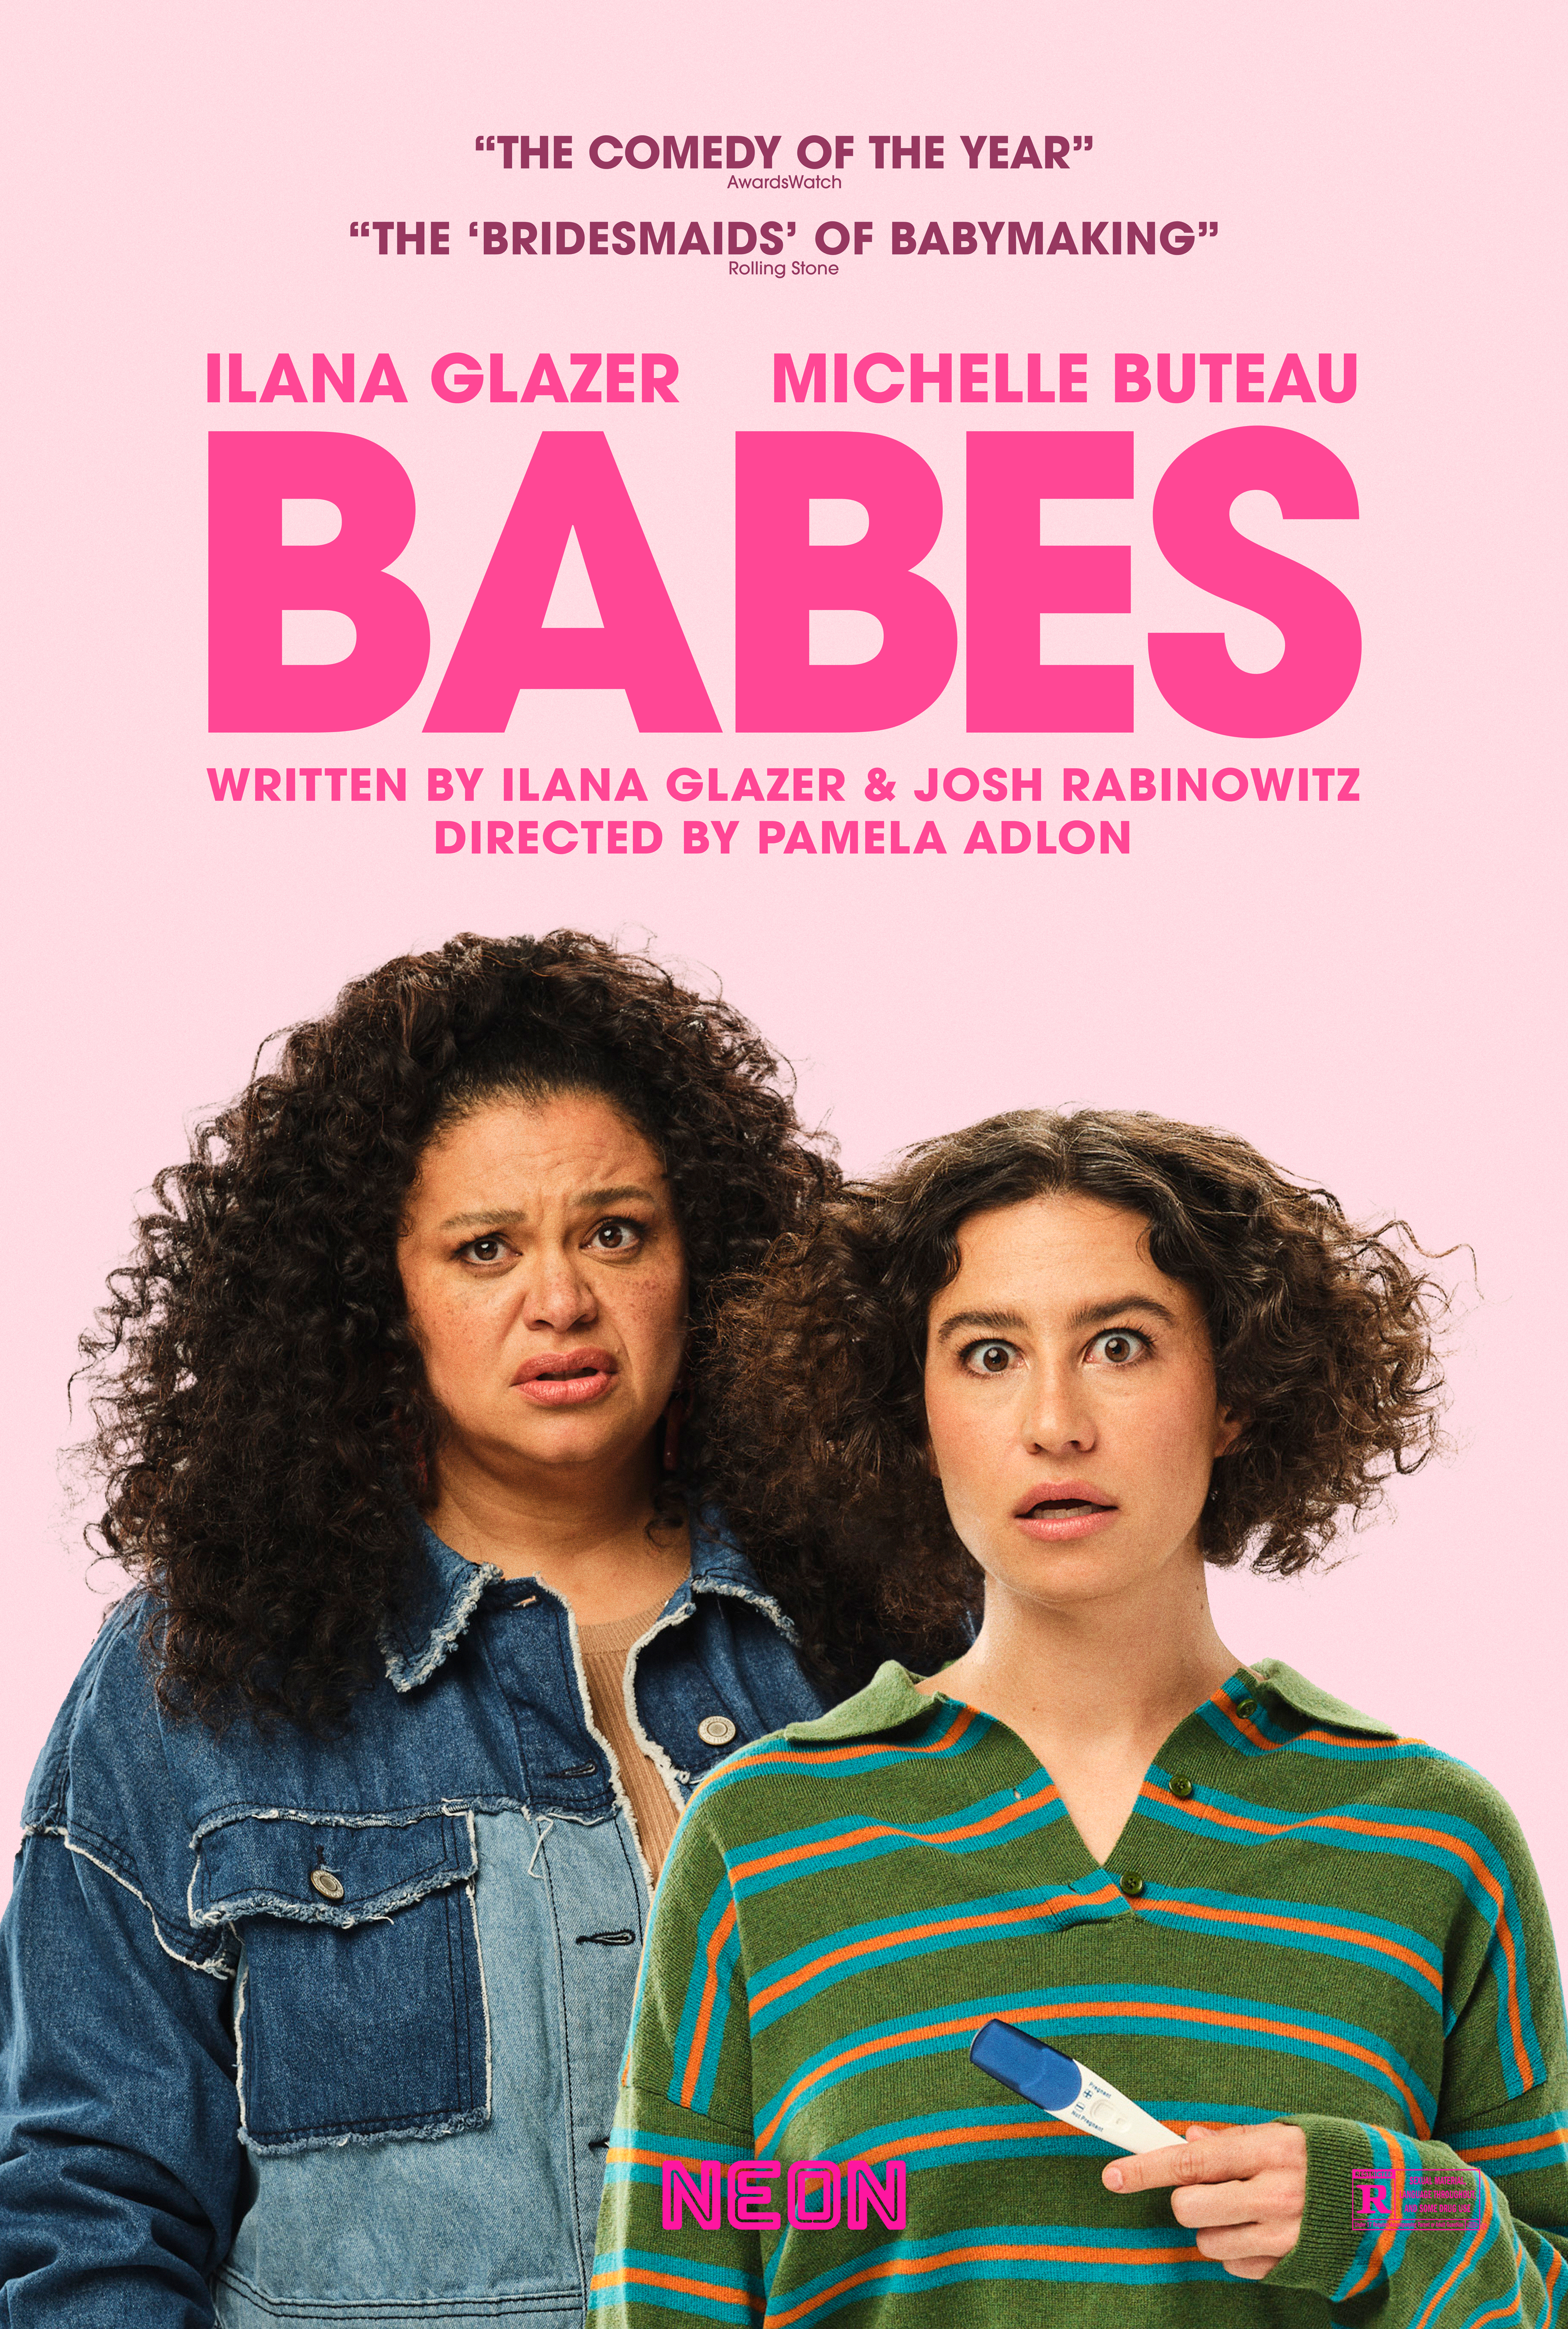 BABES Q&A with filmmaker Pamela Adlon and co-writer Josh Rabinowitz